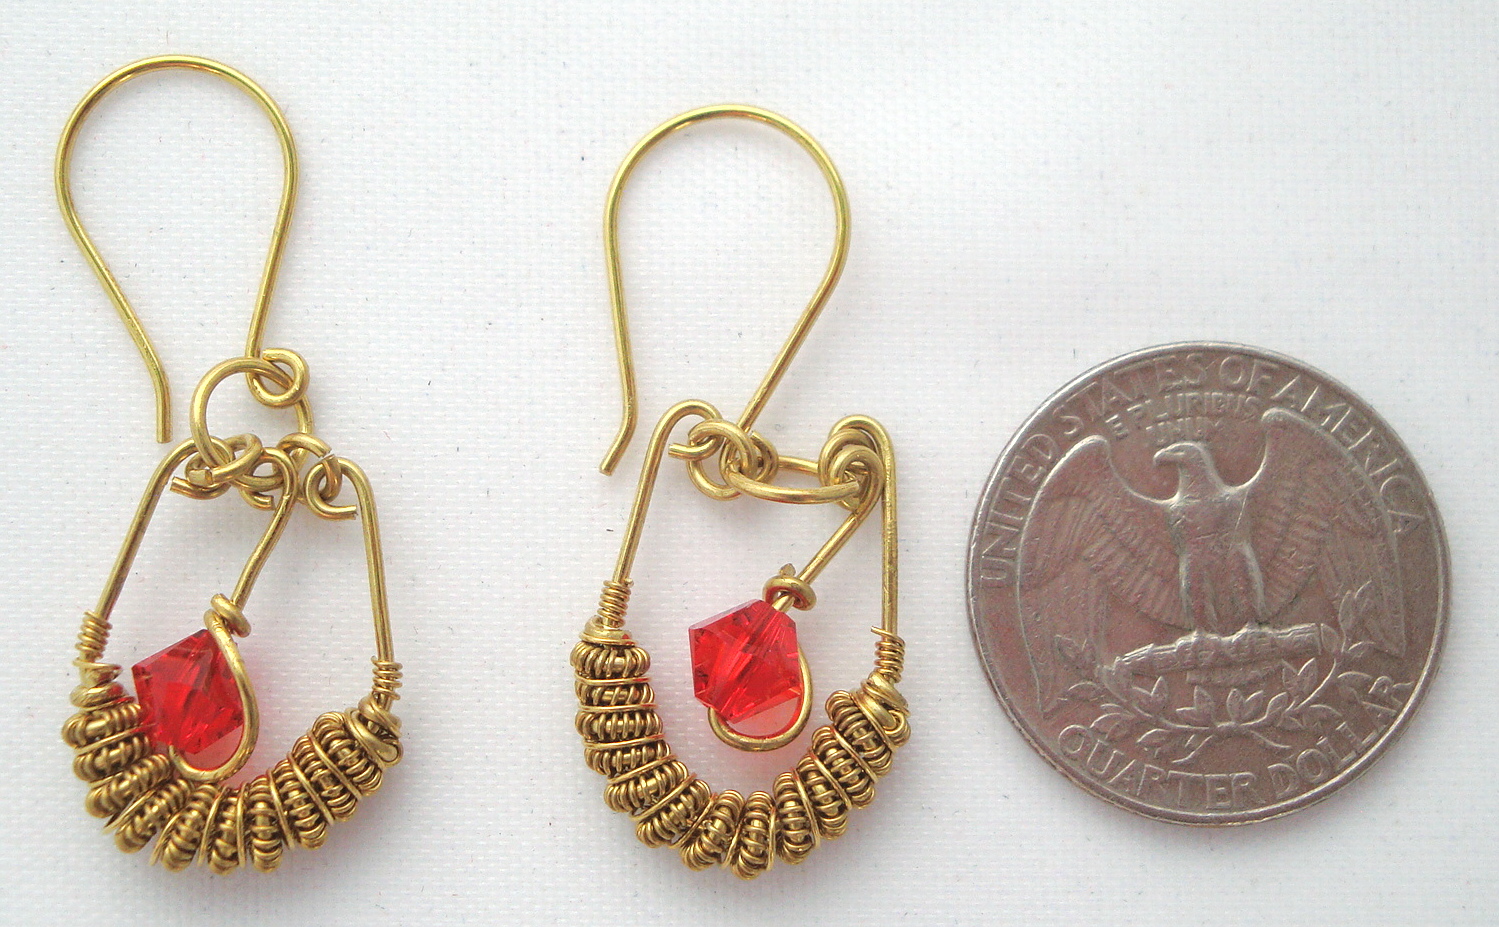 Bronze Spiral earrings